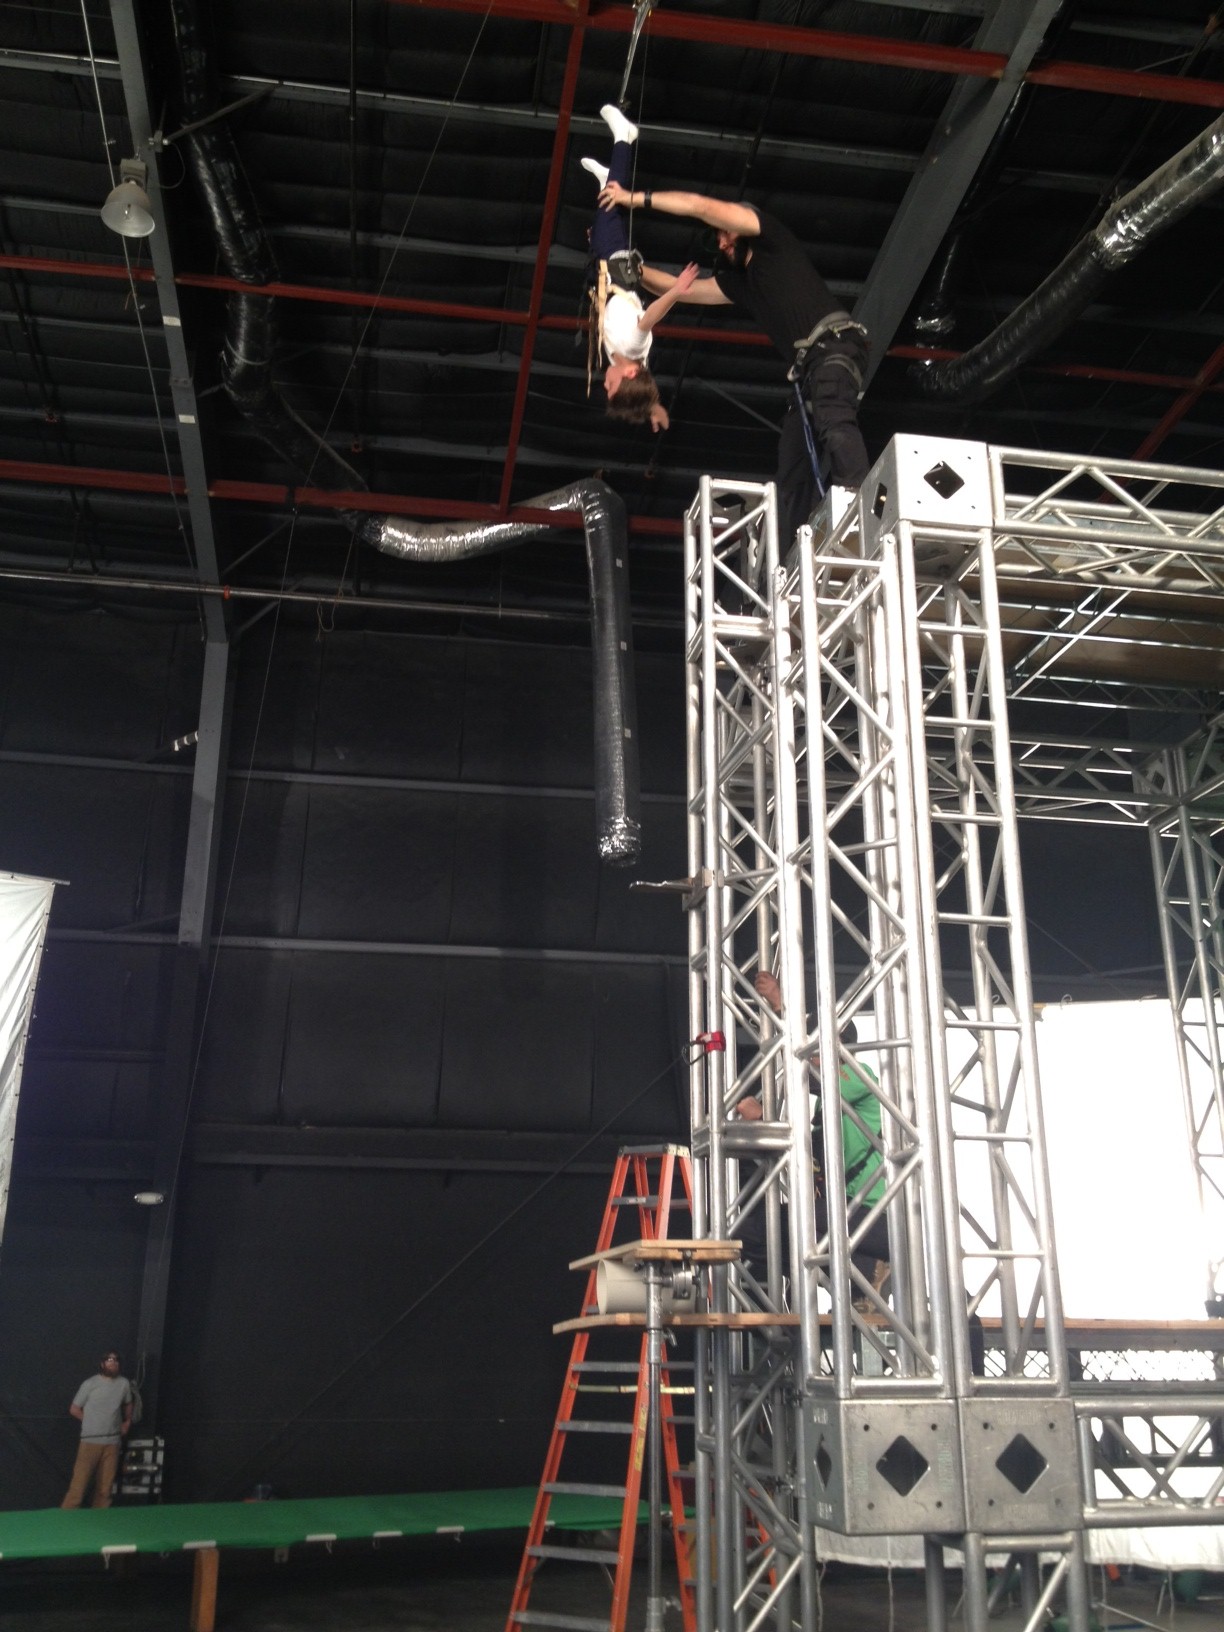 Stunt work for McDonalds with stunt man Casey Adams.